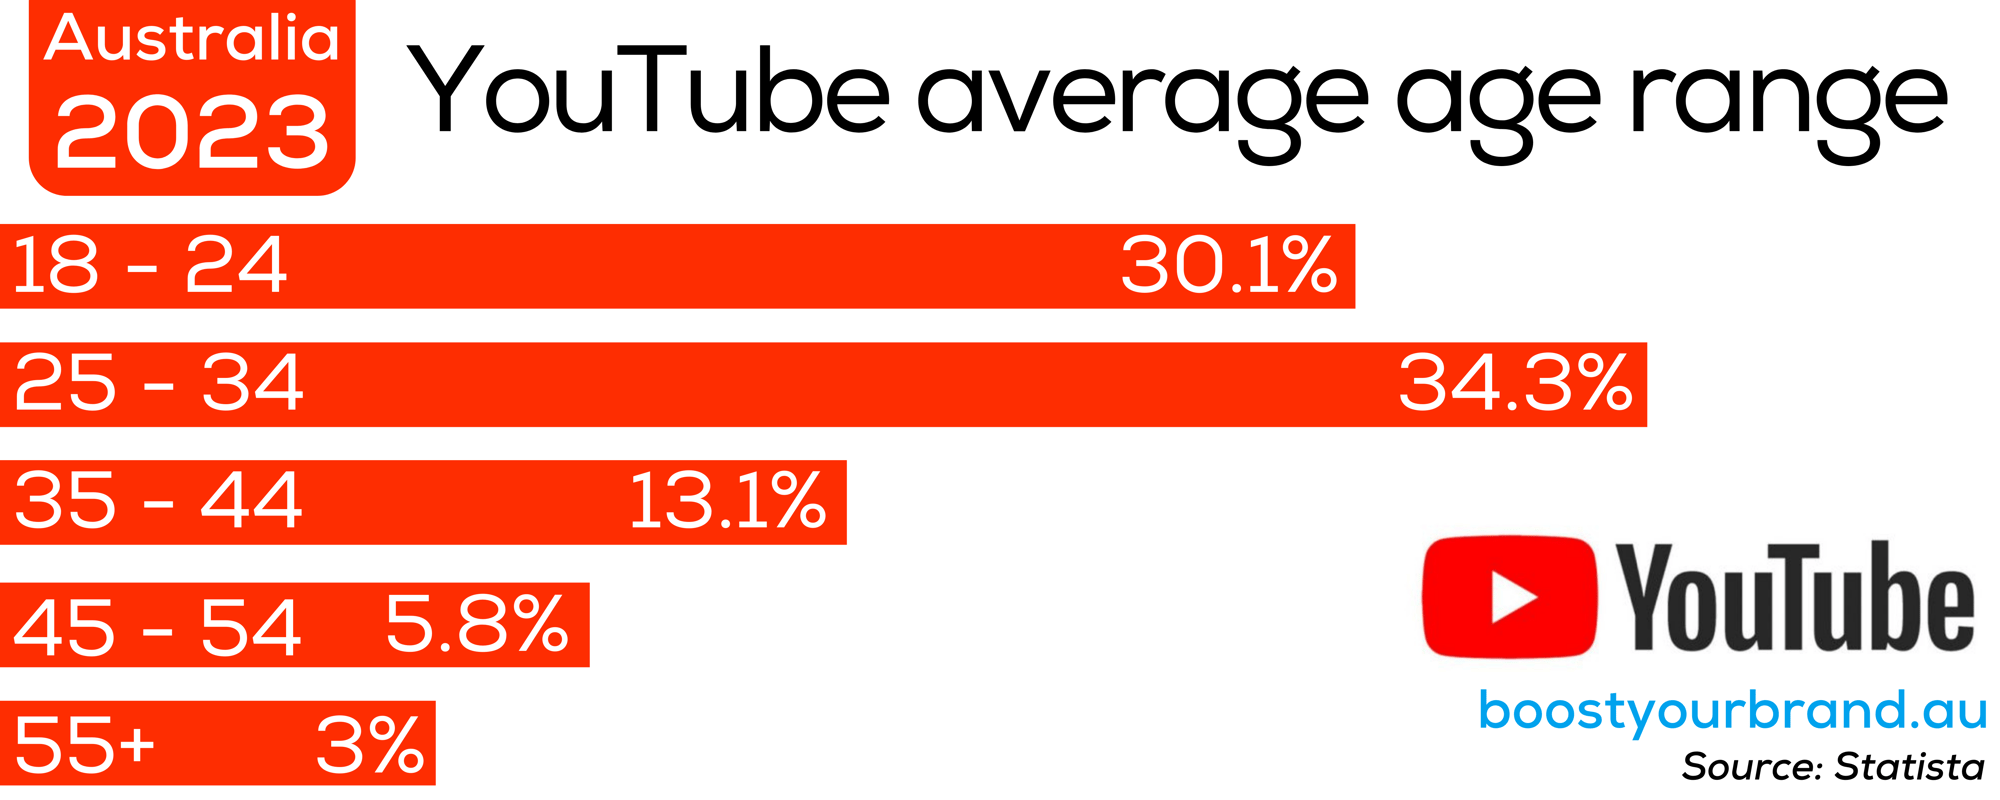 YouTube average age range Boost Your Brand Digital Marketing Agency Melbourne